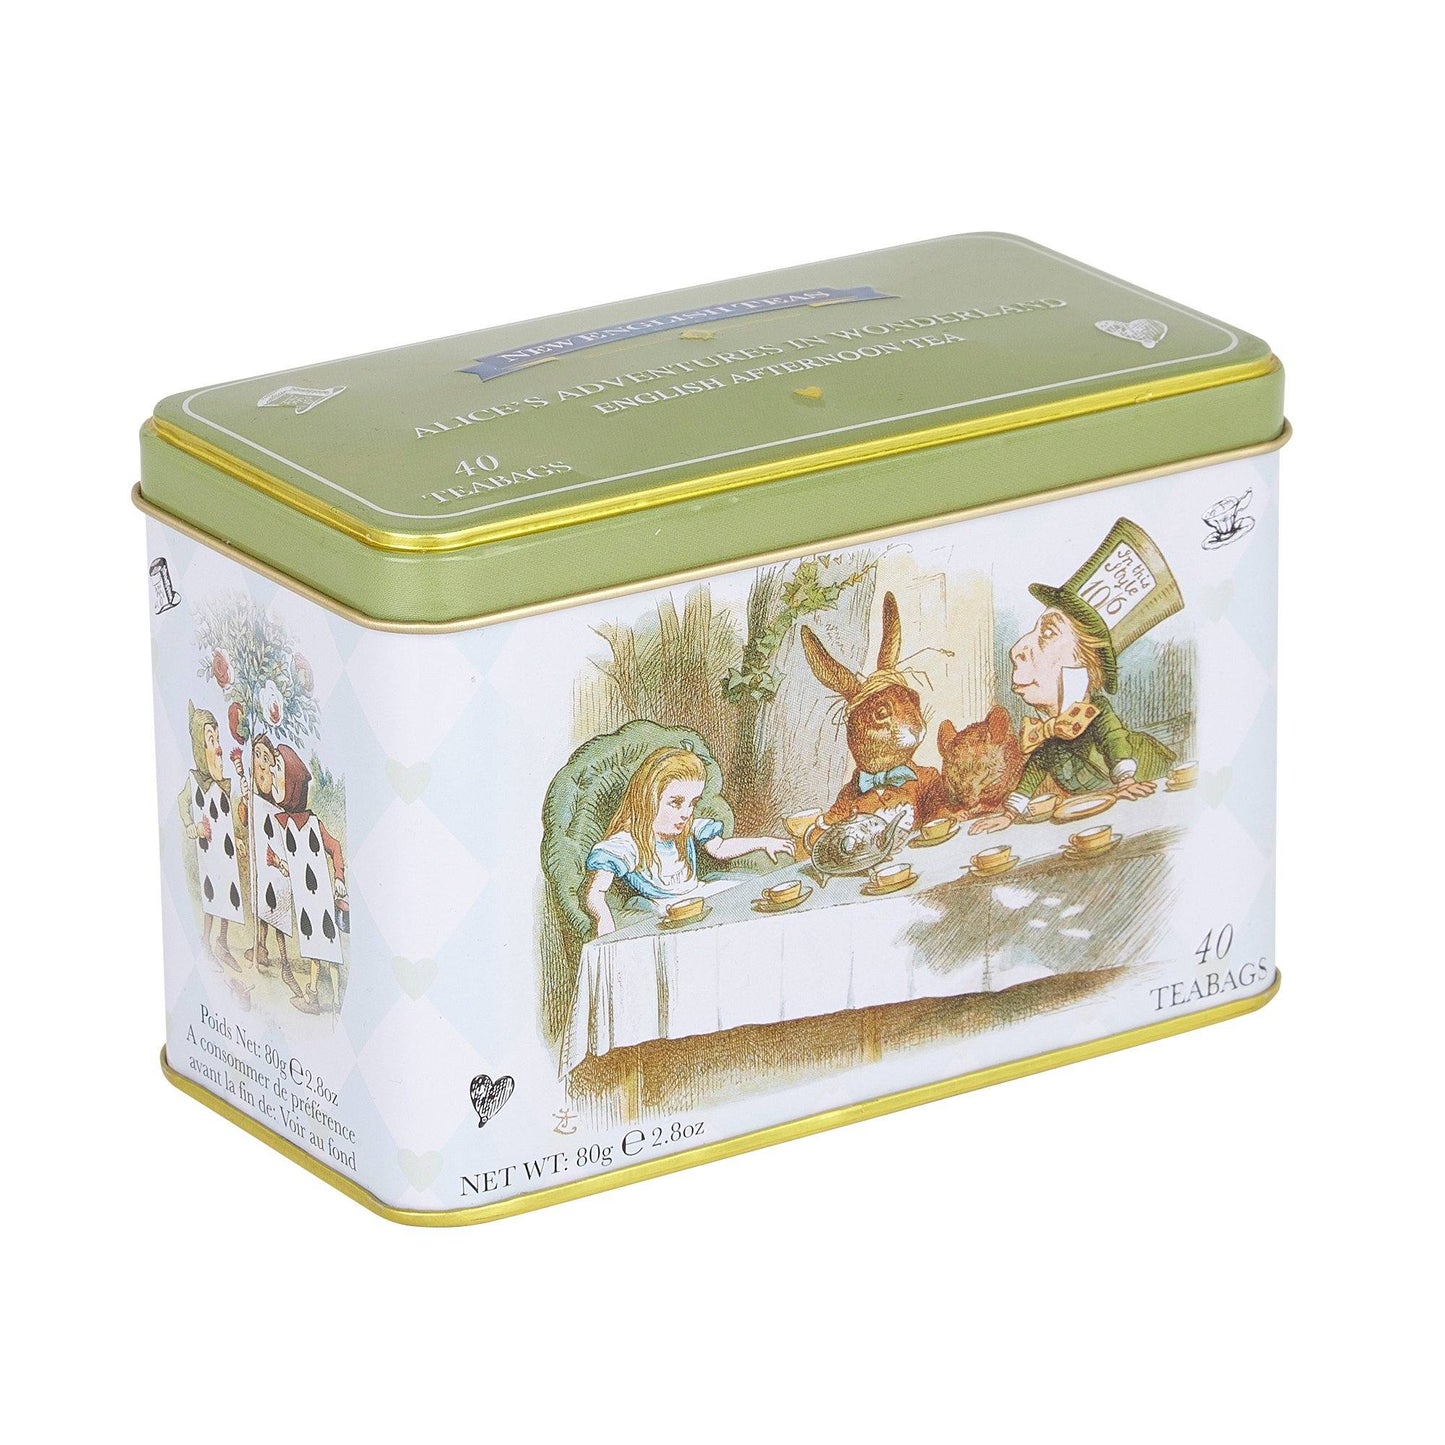 Alice In Wonderland English Afternoon Tea Tin 40 Teabags Black Tea New English Teas 